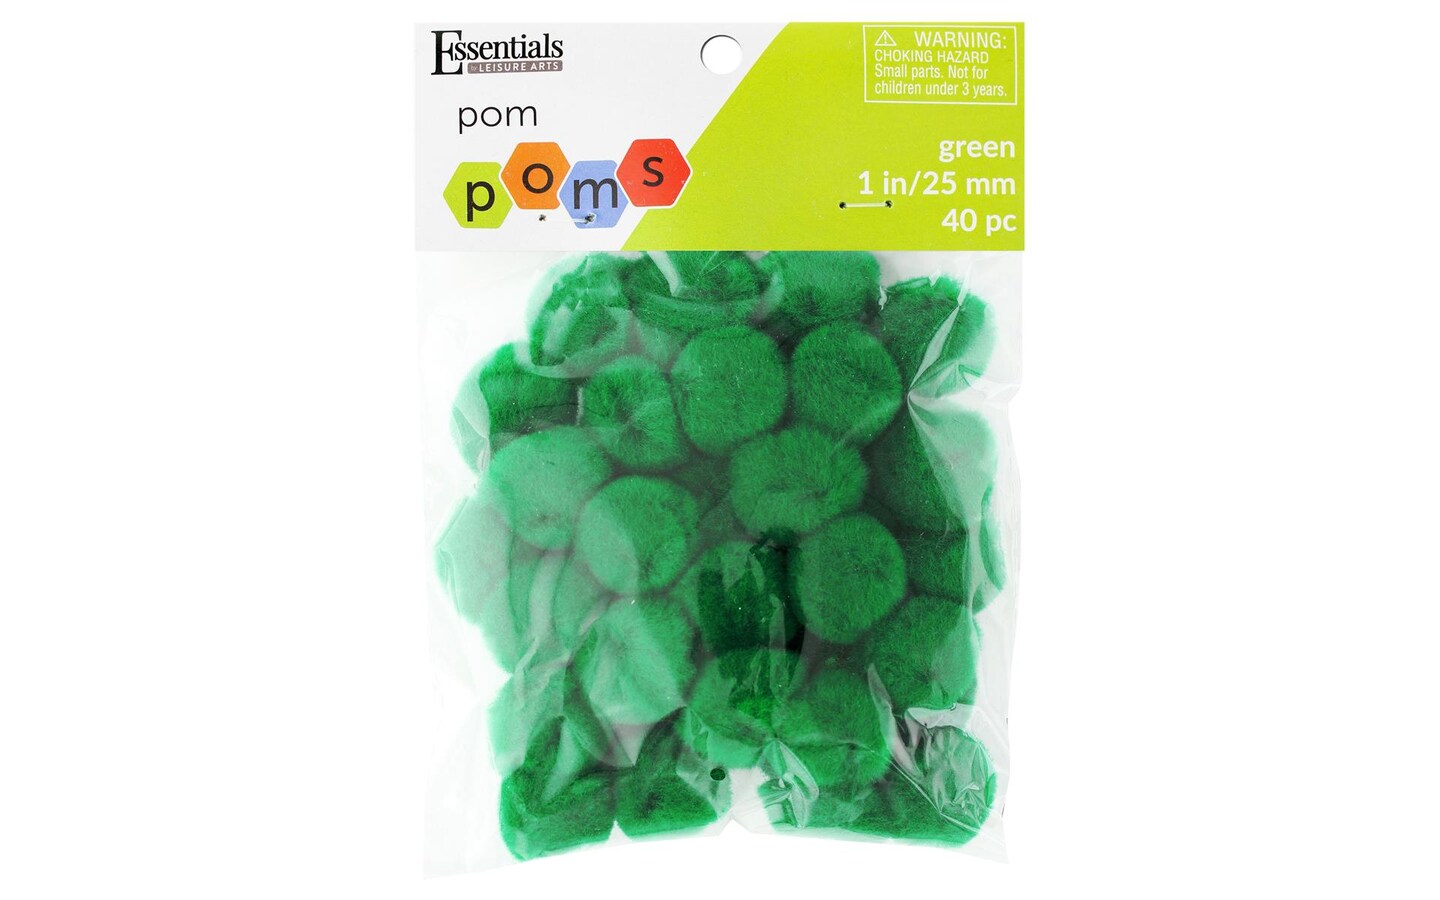 Essentials by Leisure Arts Pom Poms - Green - 1 - 40 piece pom